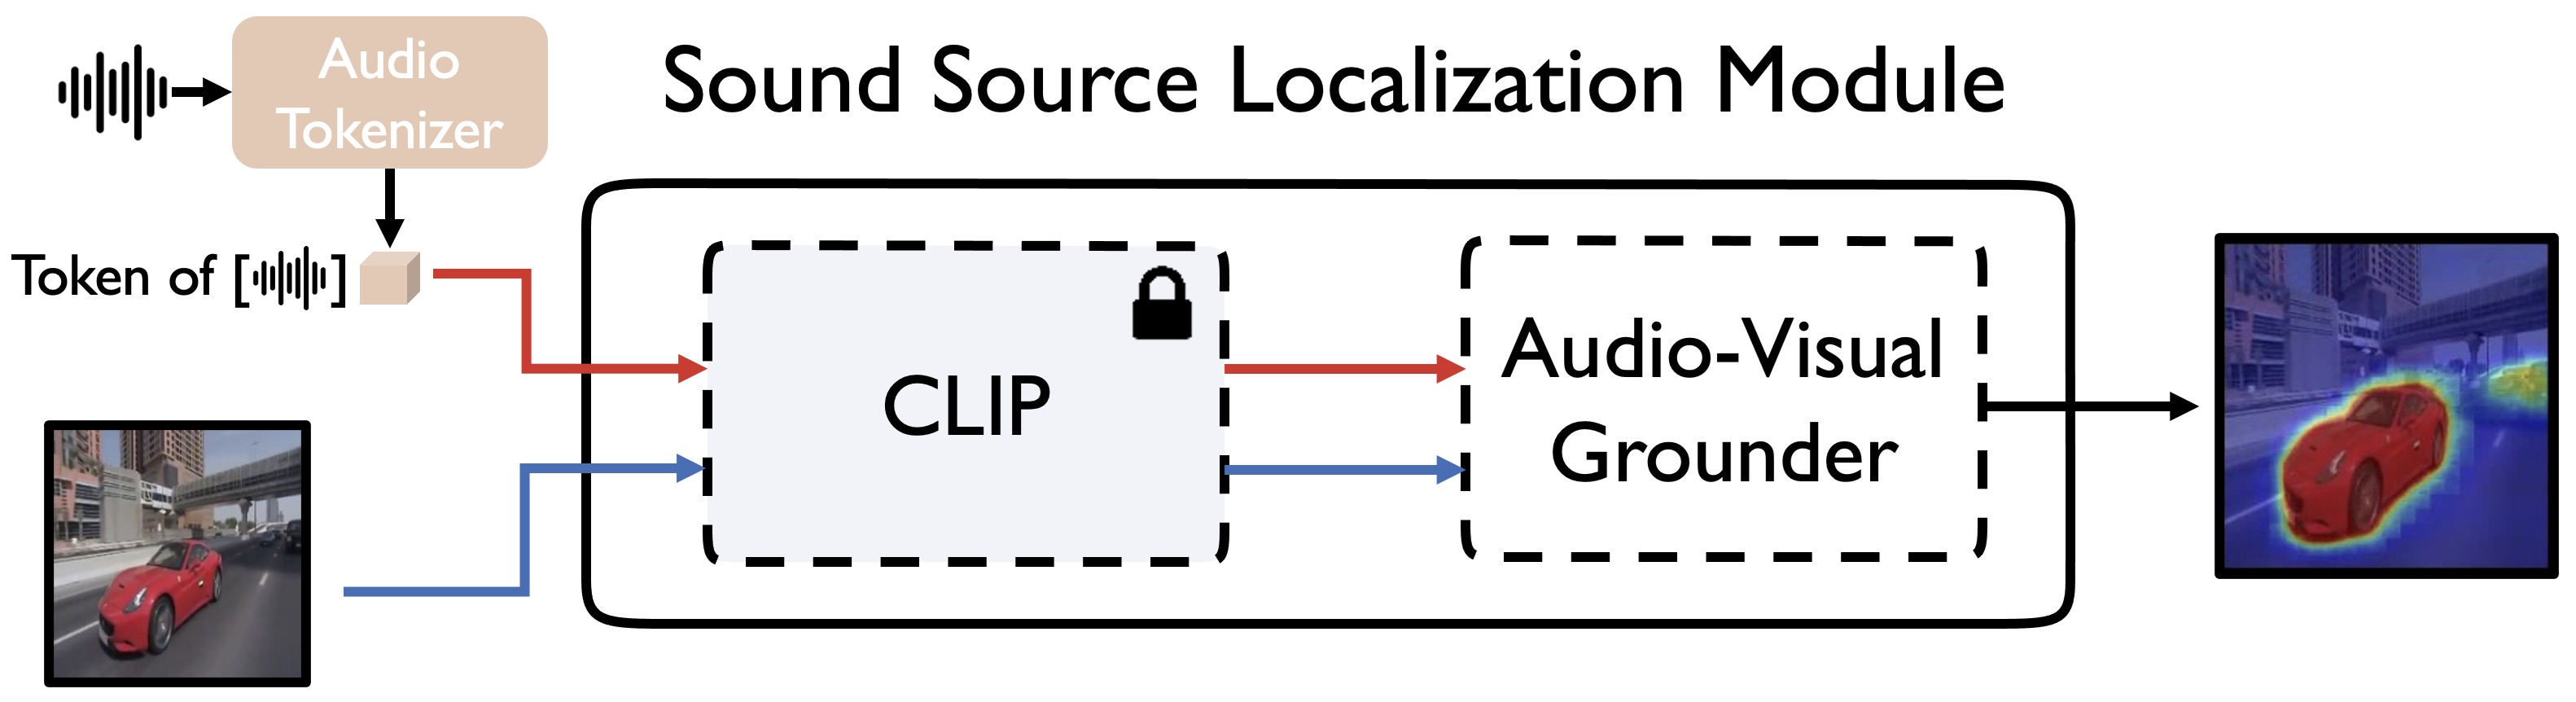 Can CLIP Help Sound Source Localization?